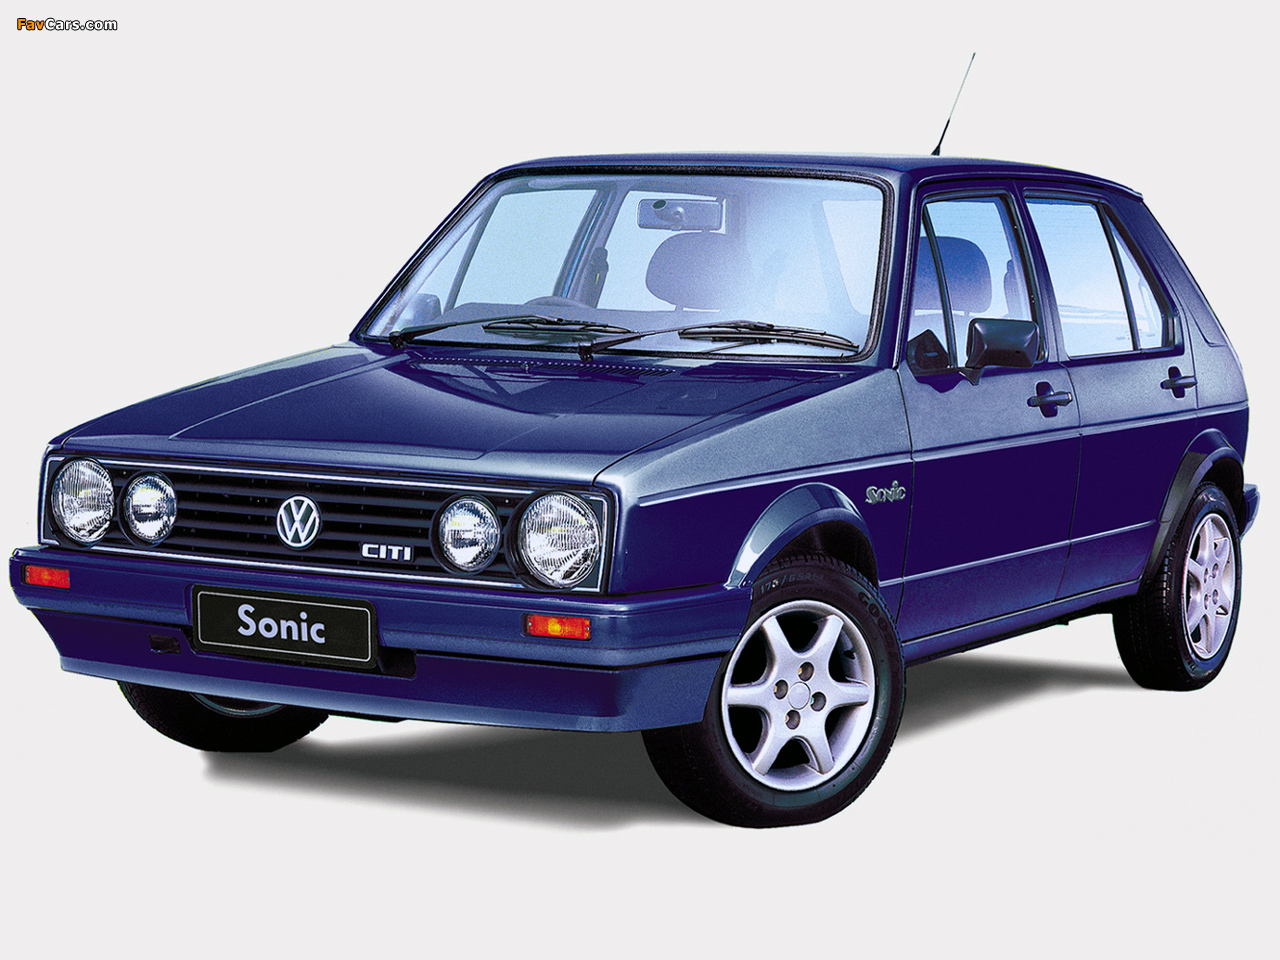 Images of Volkswagen Citi Golf Sonic 1997 (1280 x 960)